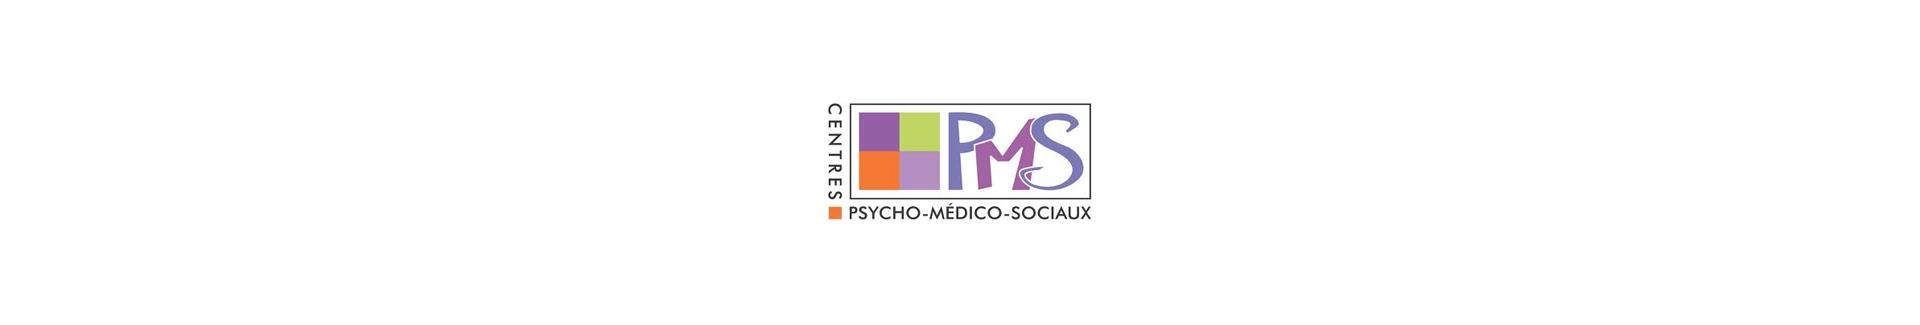 PMS-centra (in het Frans)